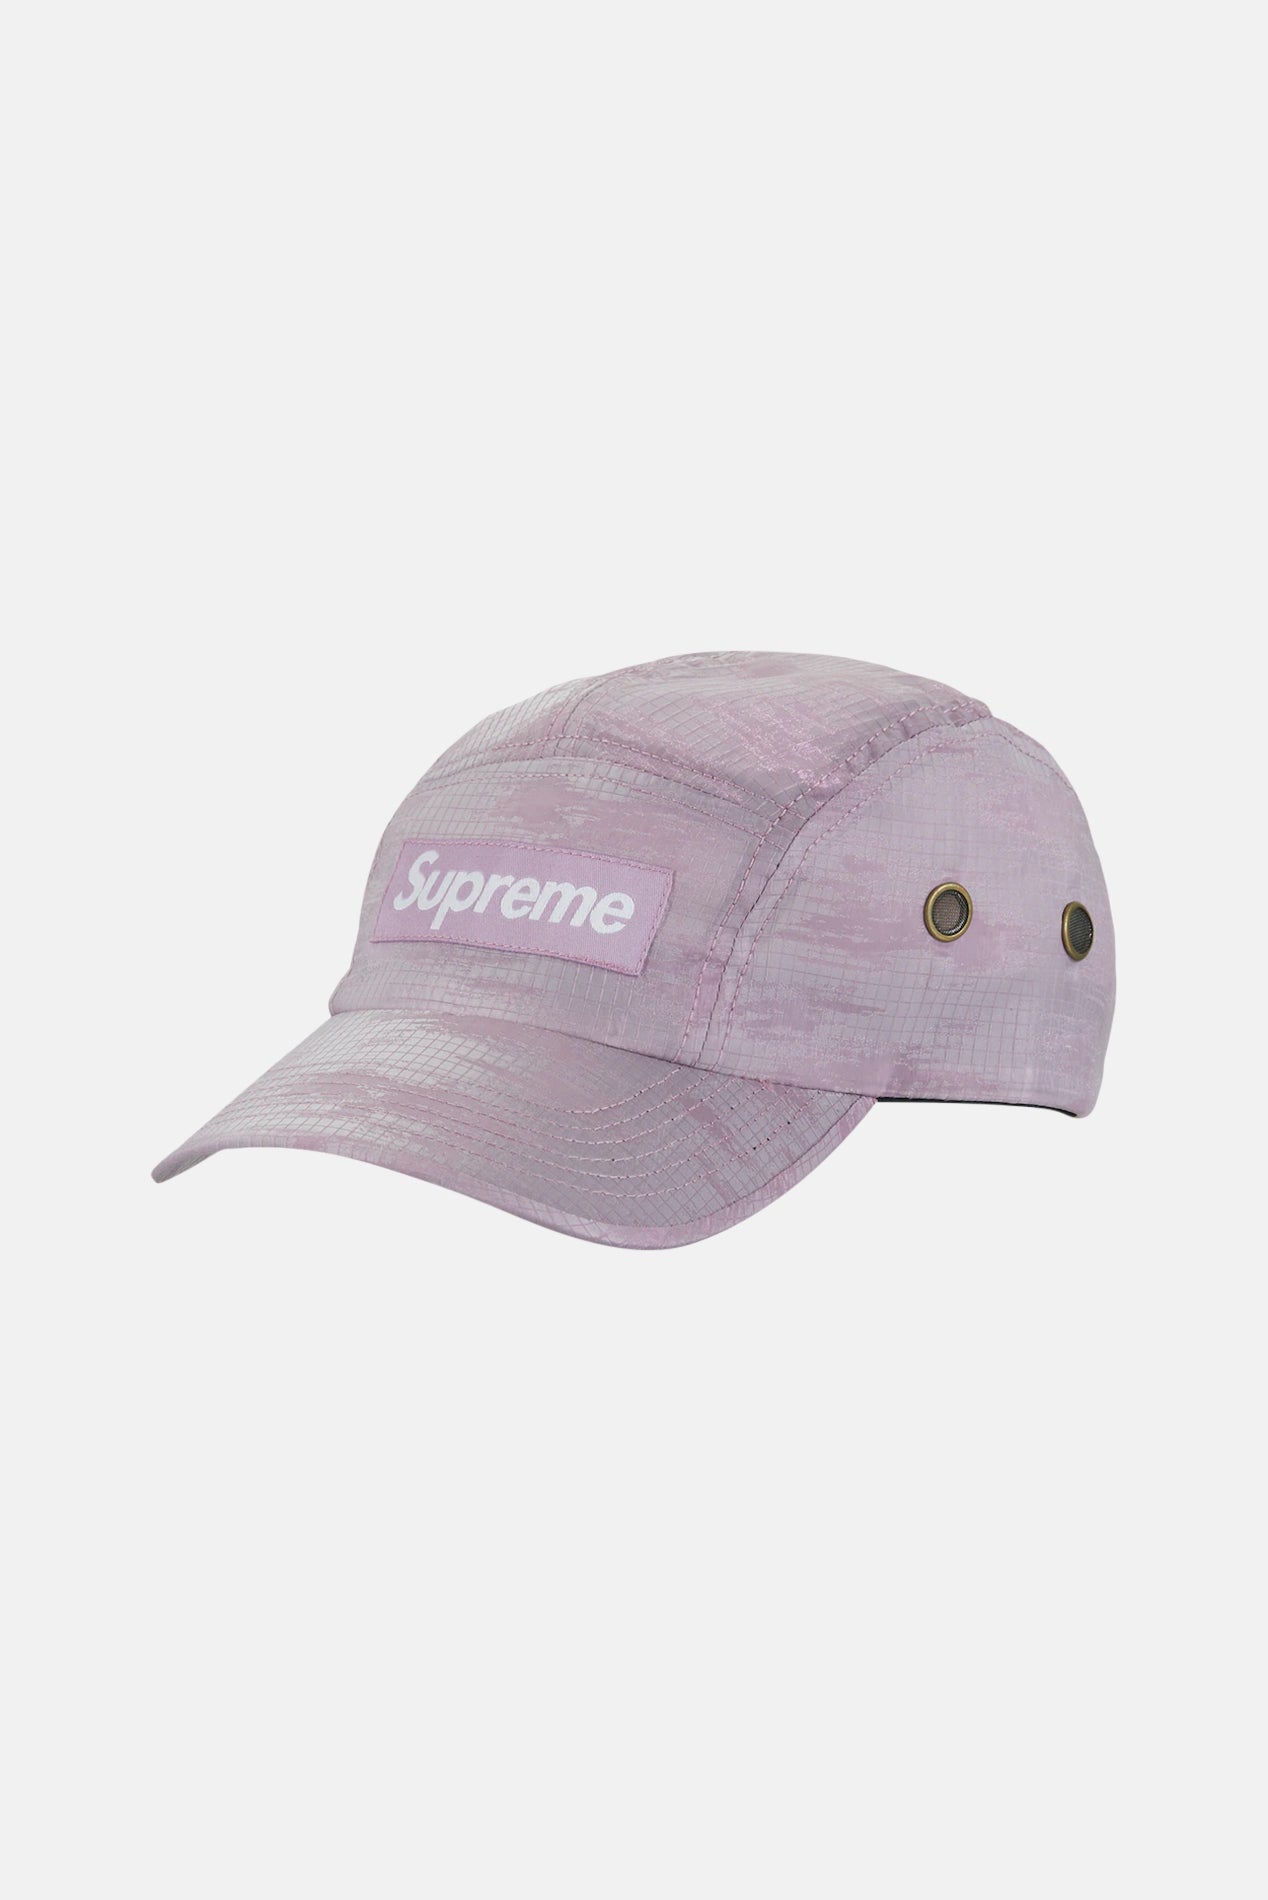 Supreme Suede Hats for Men